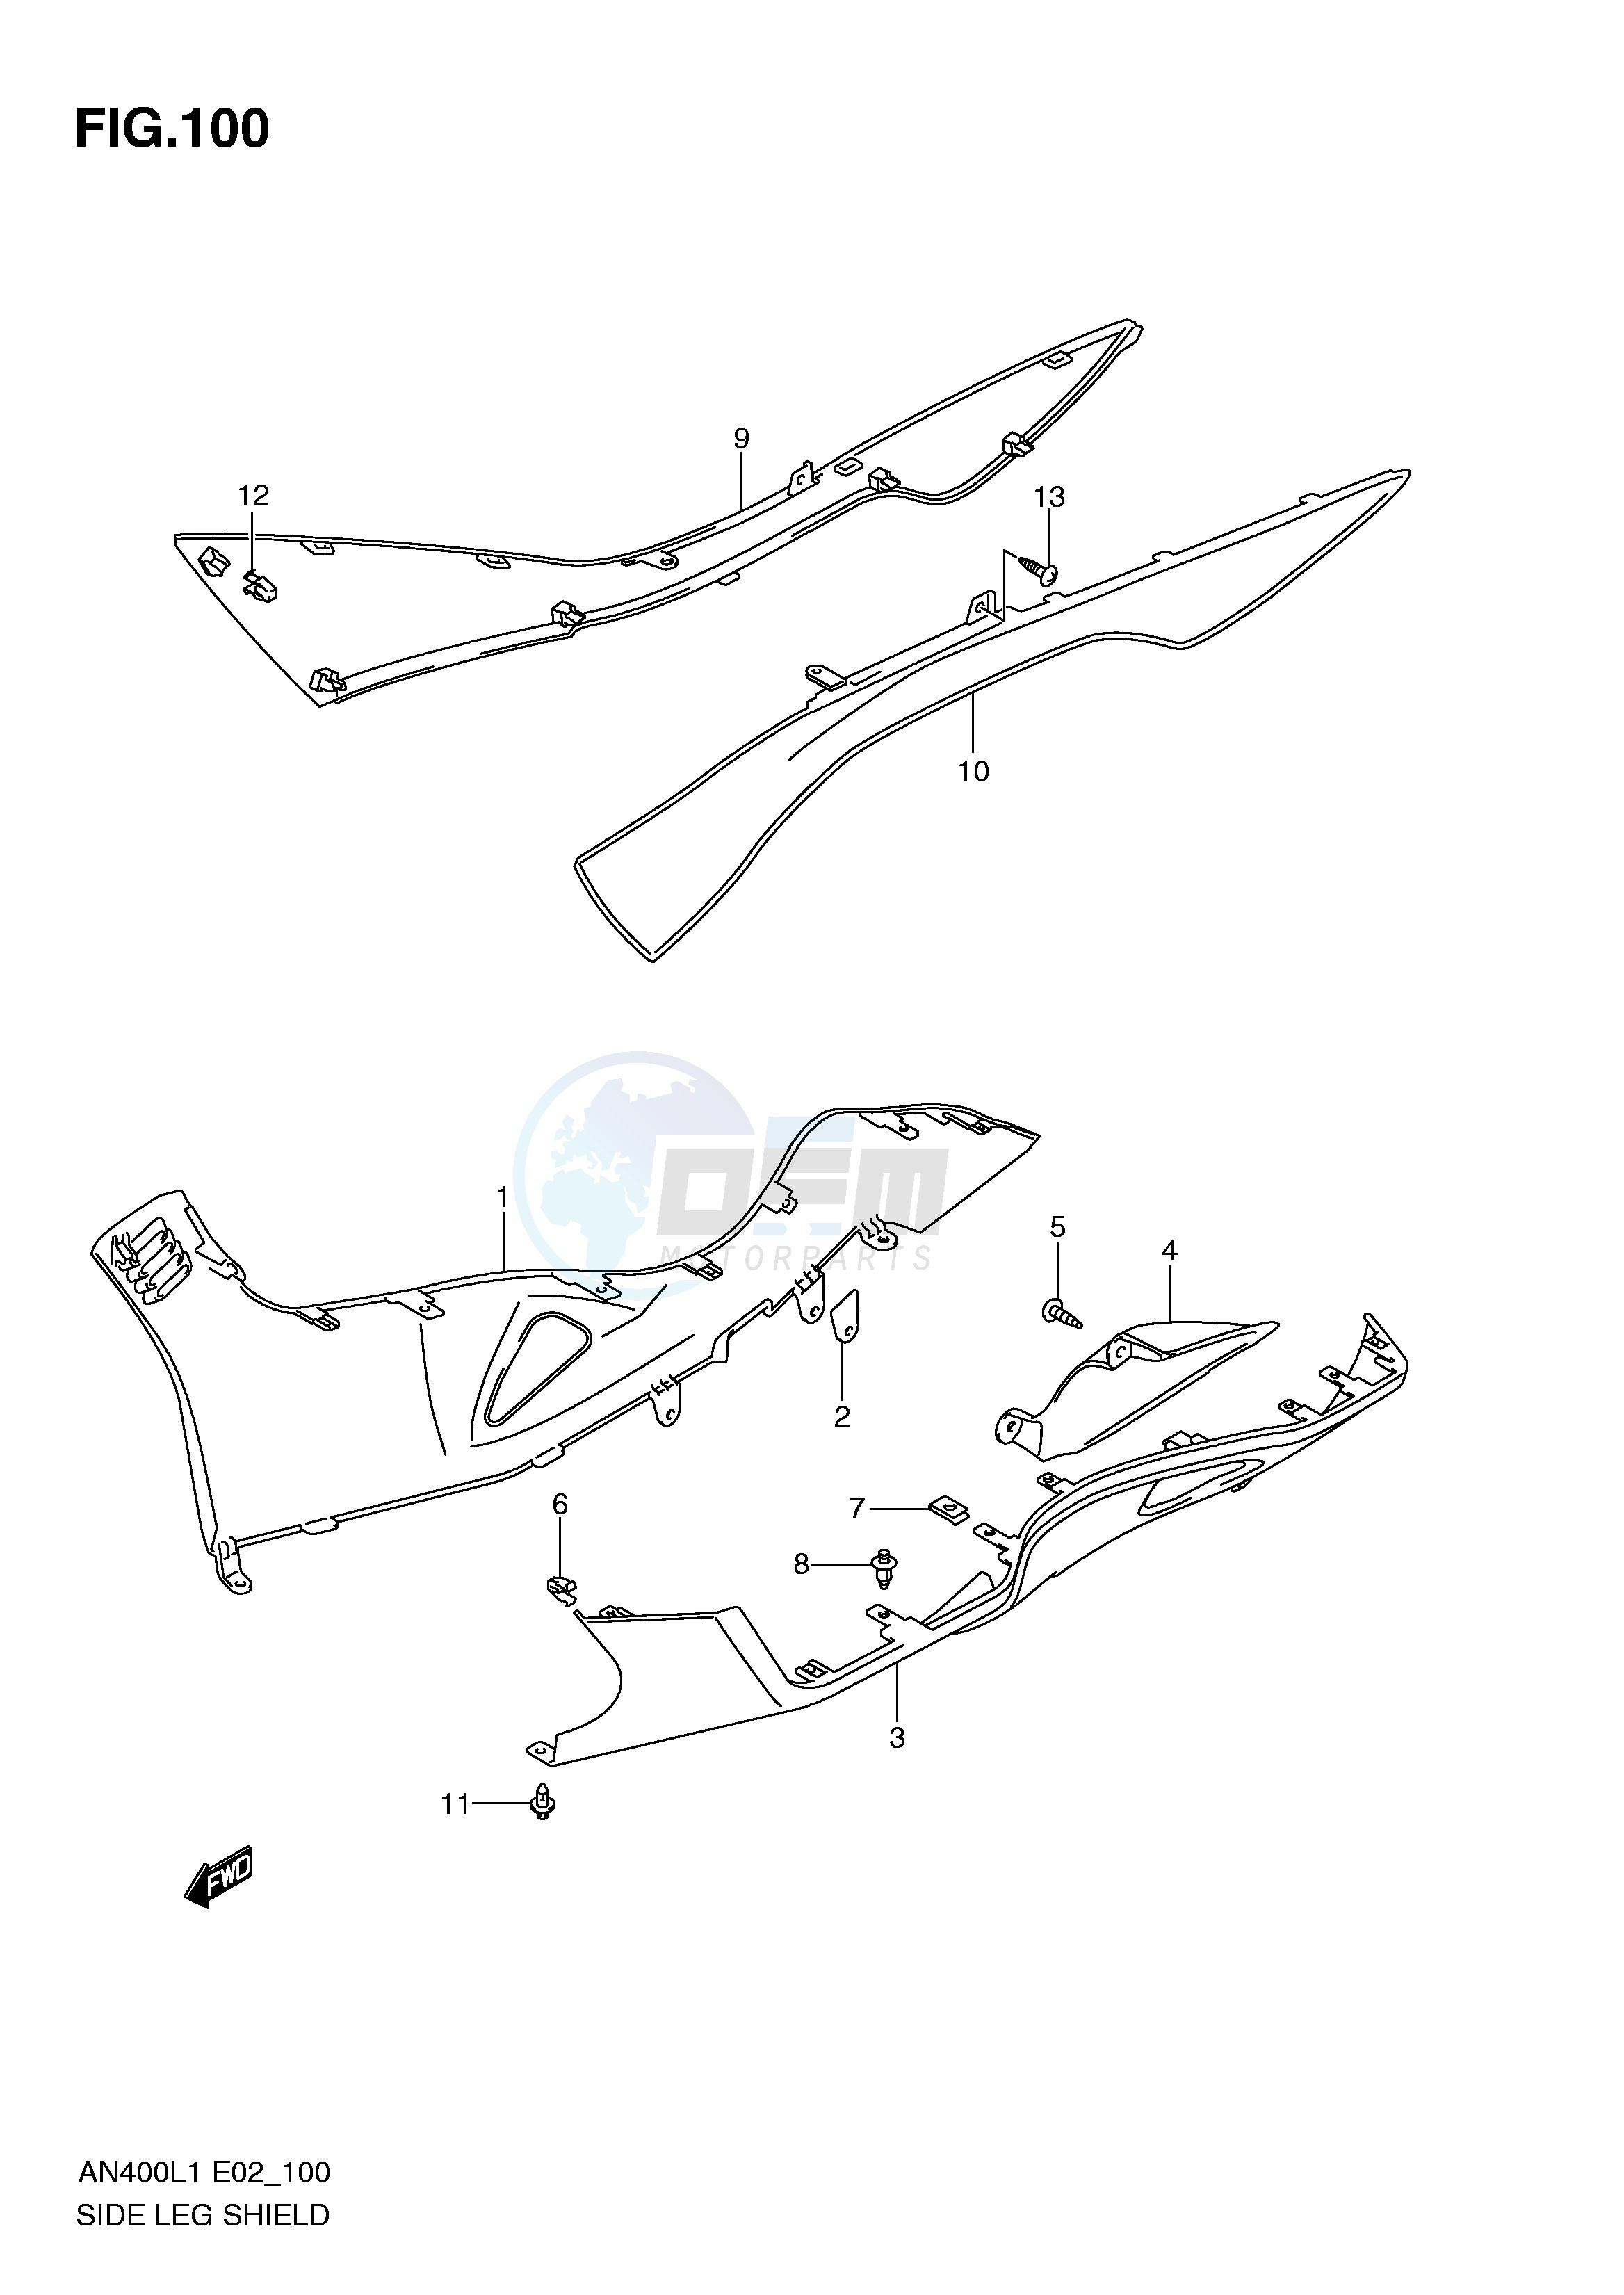 SIDE LEG SHIELD (AN400L1 E19) blueprint